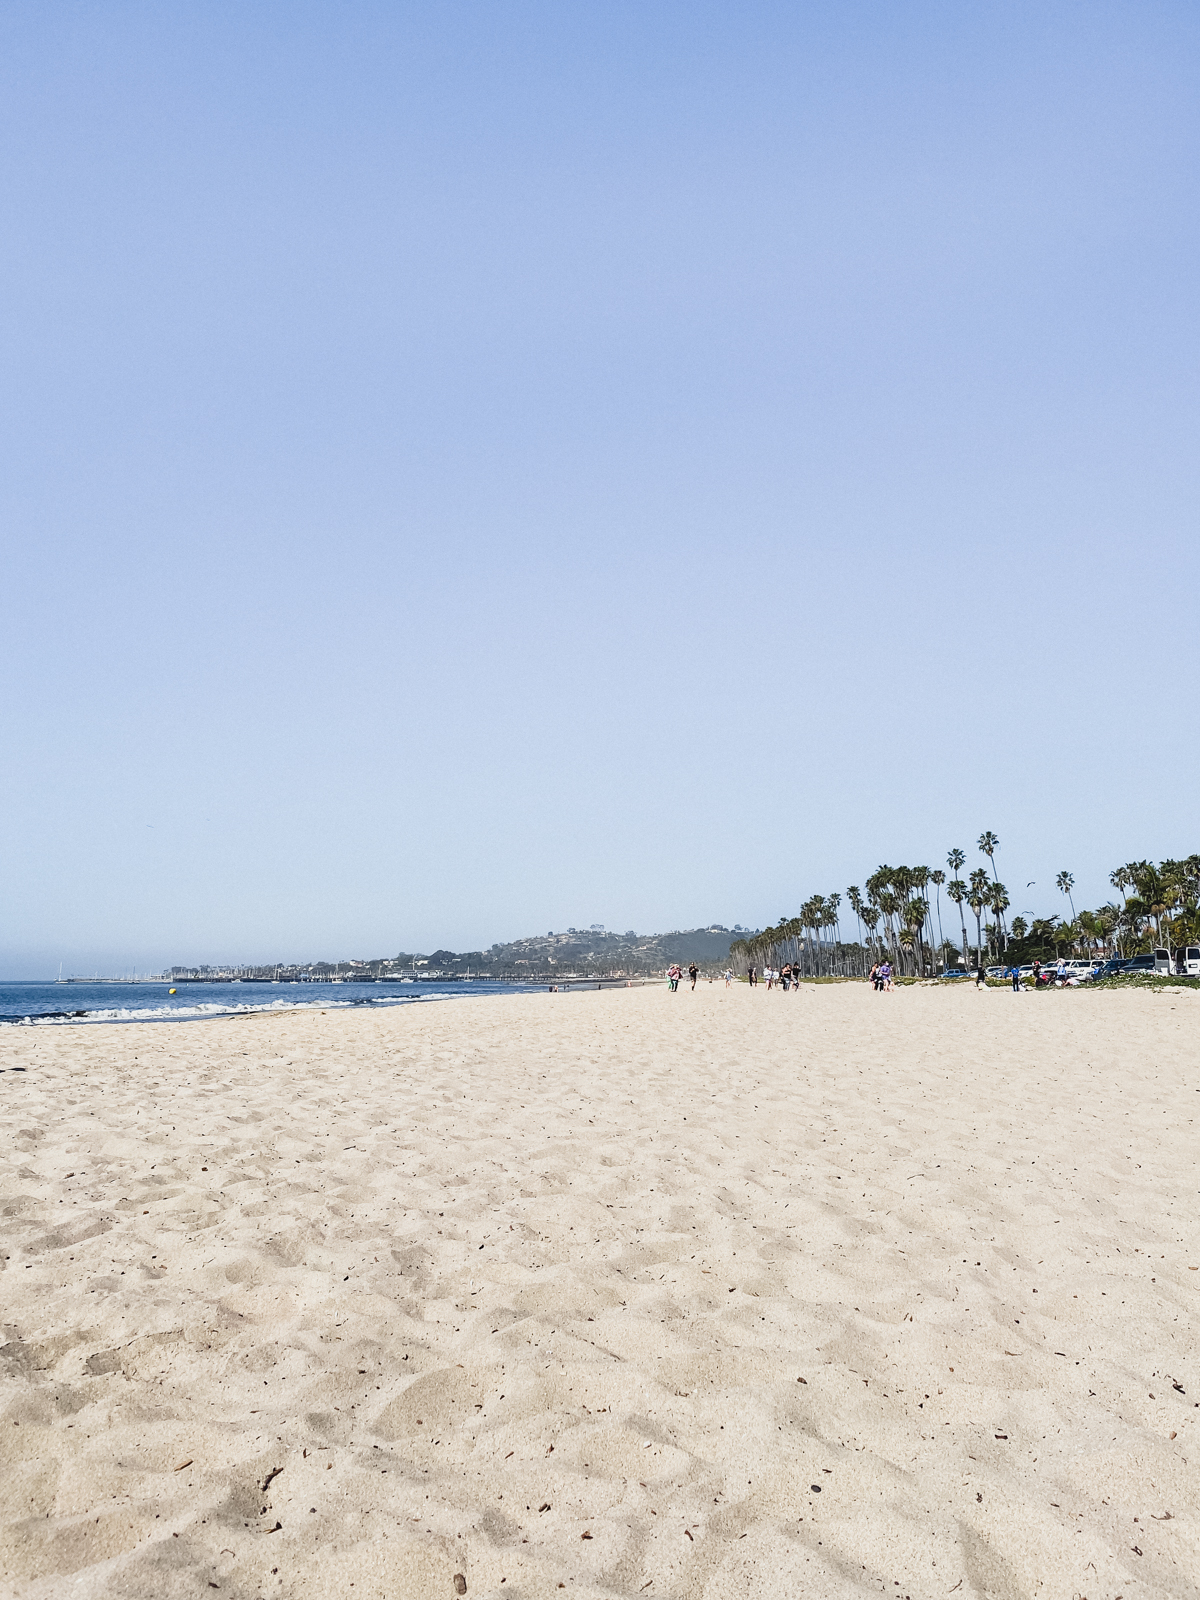 East Beach in Santa Barbara California